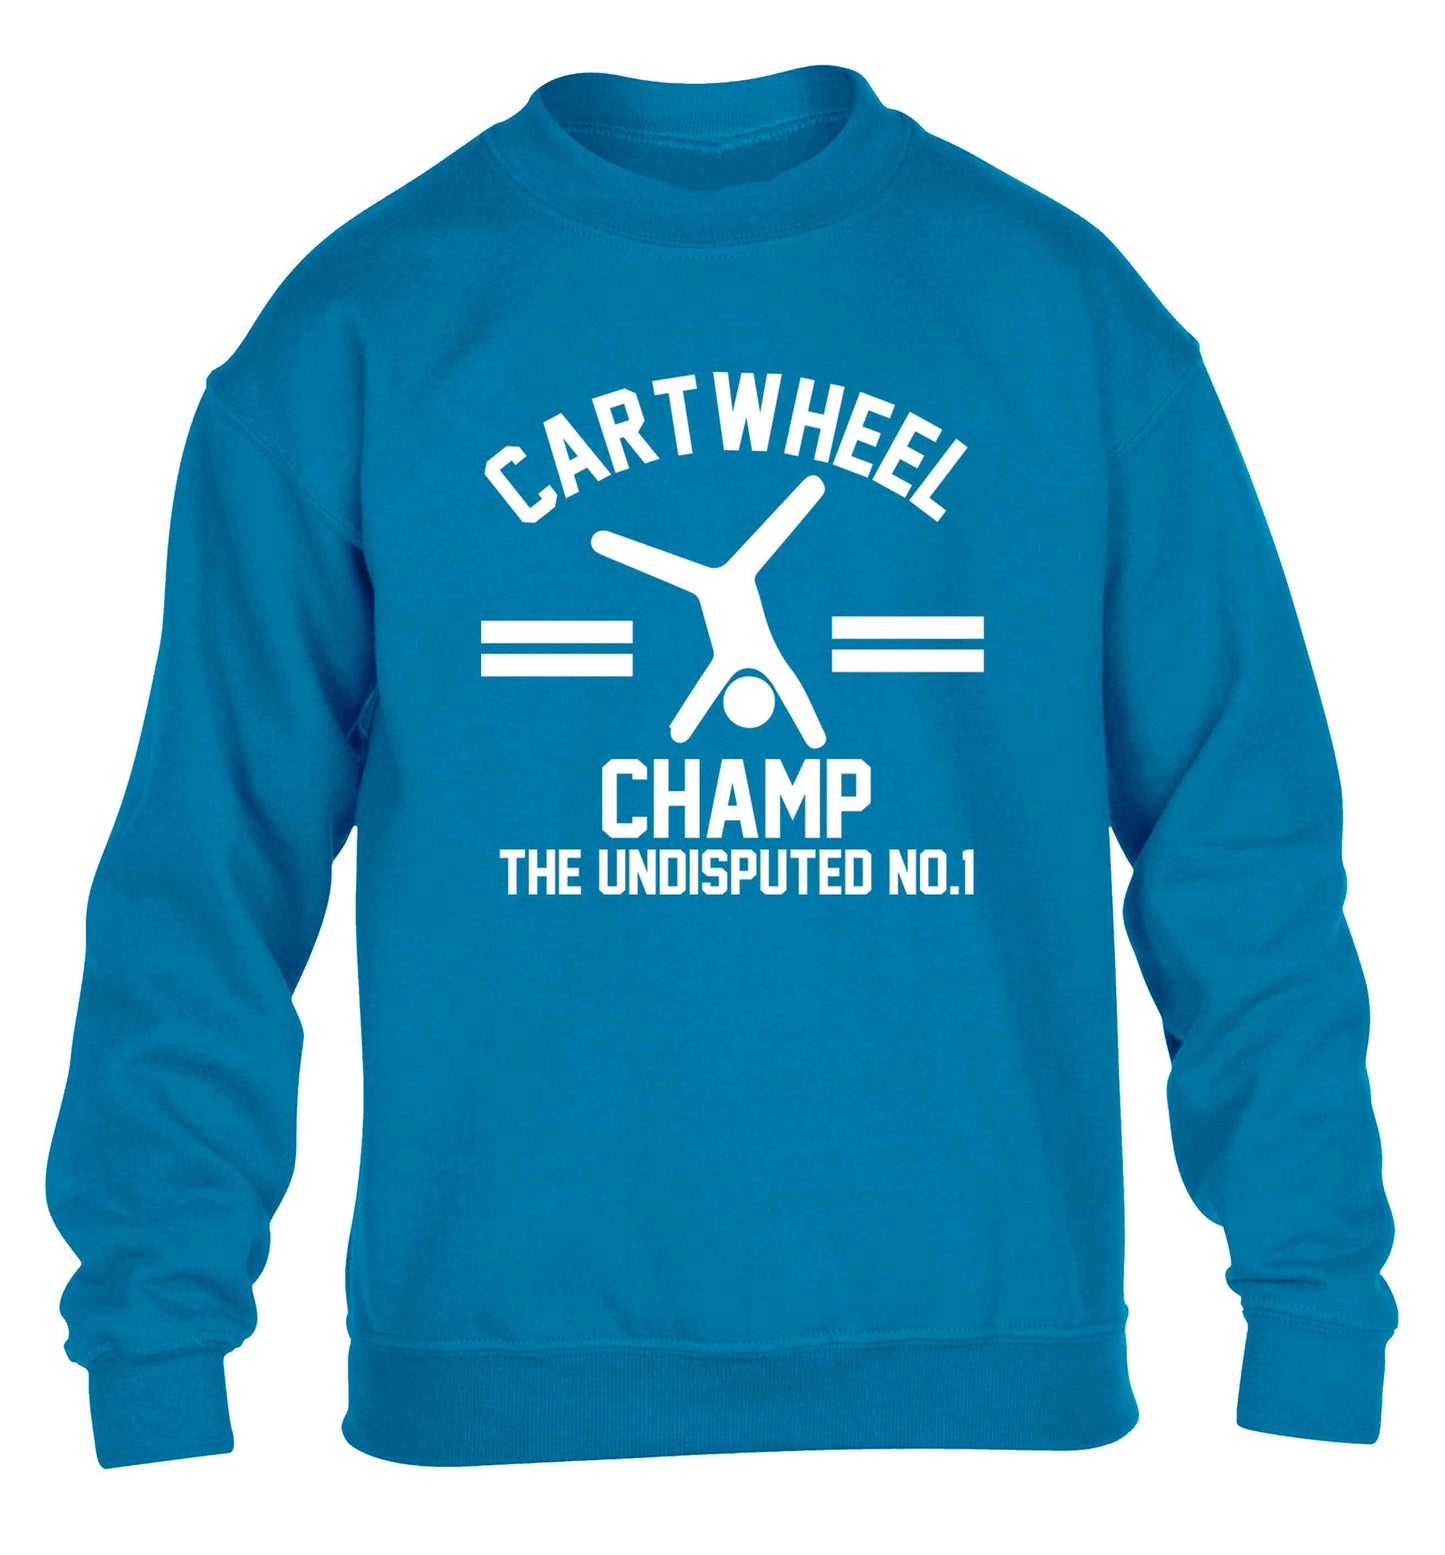 Undisputed cartwheel championship no.1  children's blue sweater 12-13 Years